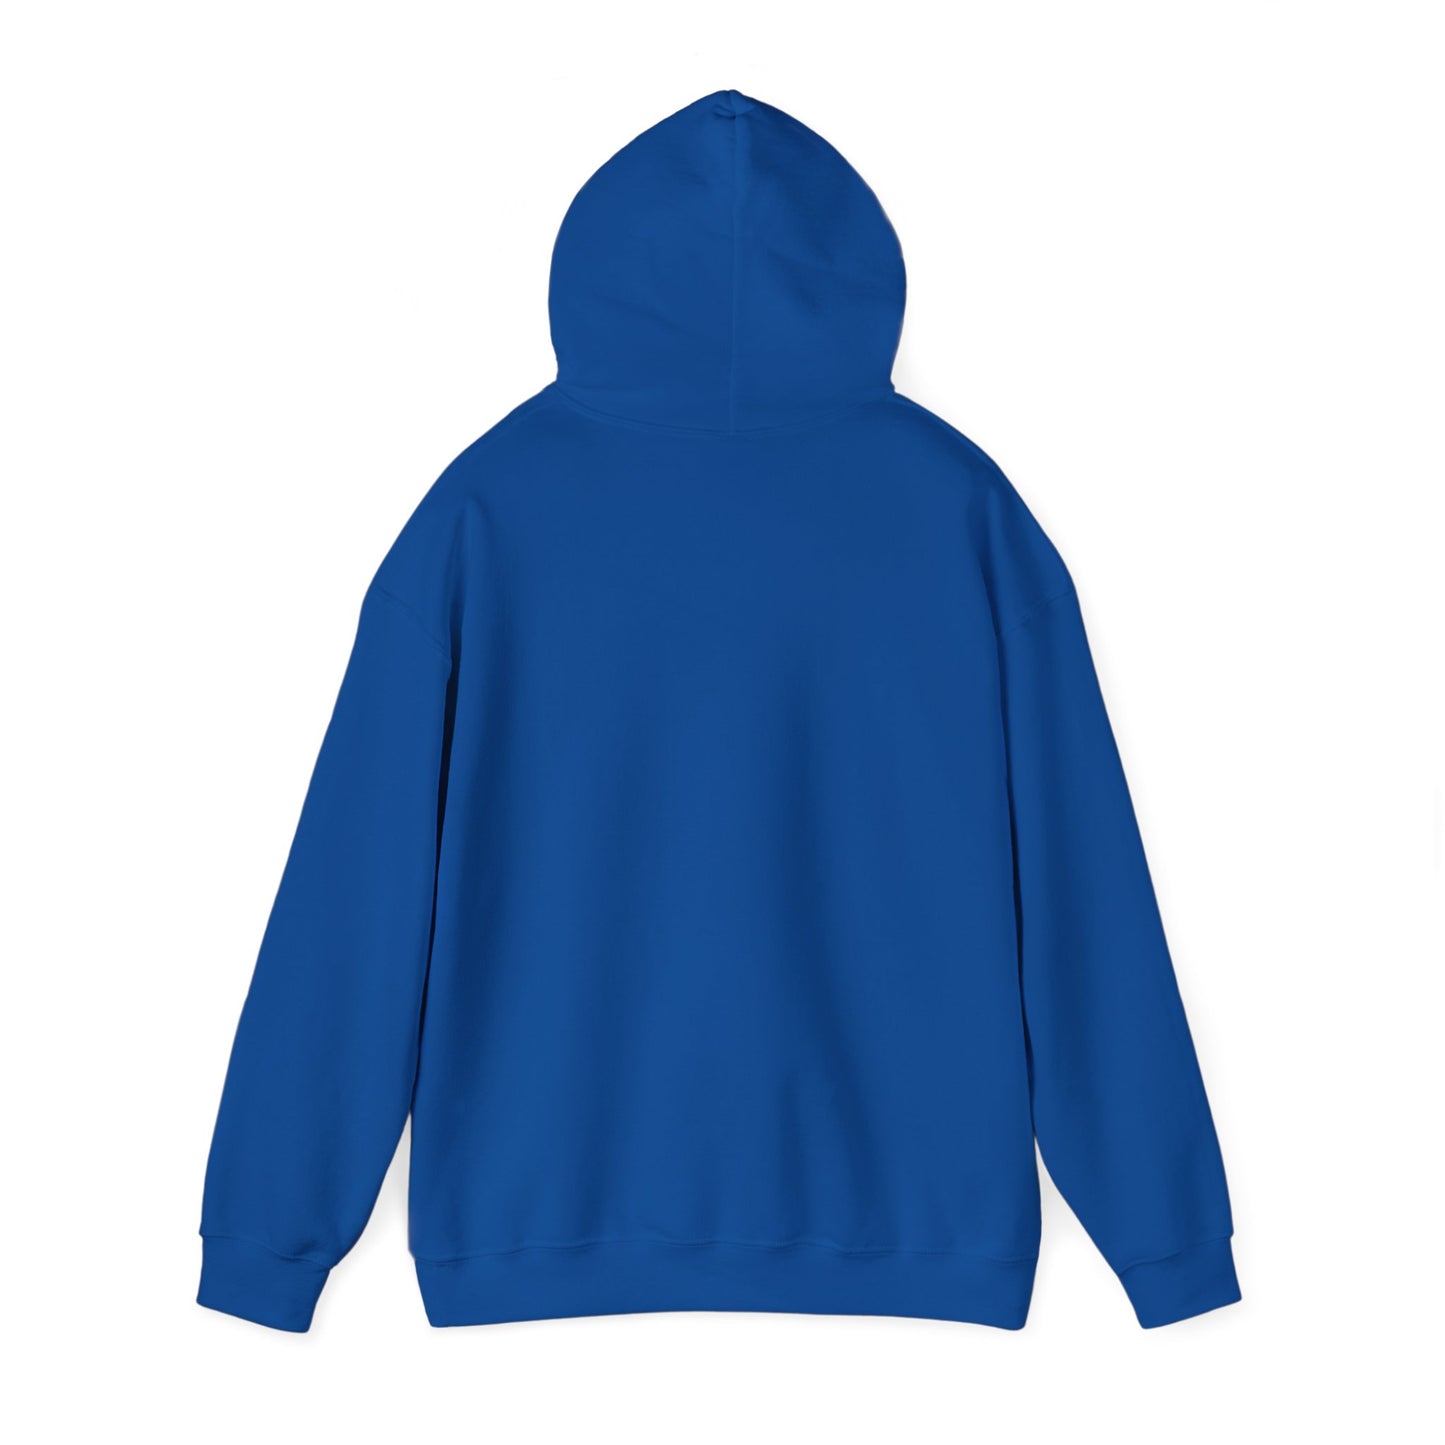 Slug Wiseman - Futsy Marlone's Unisex Hooded Sweatshirt